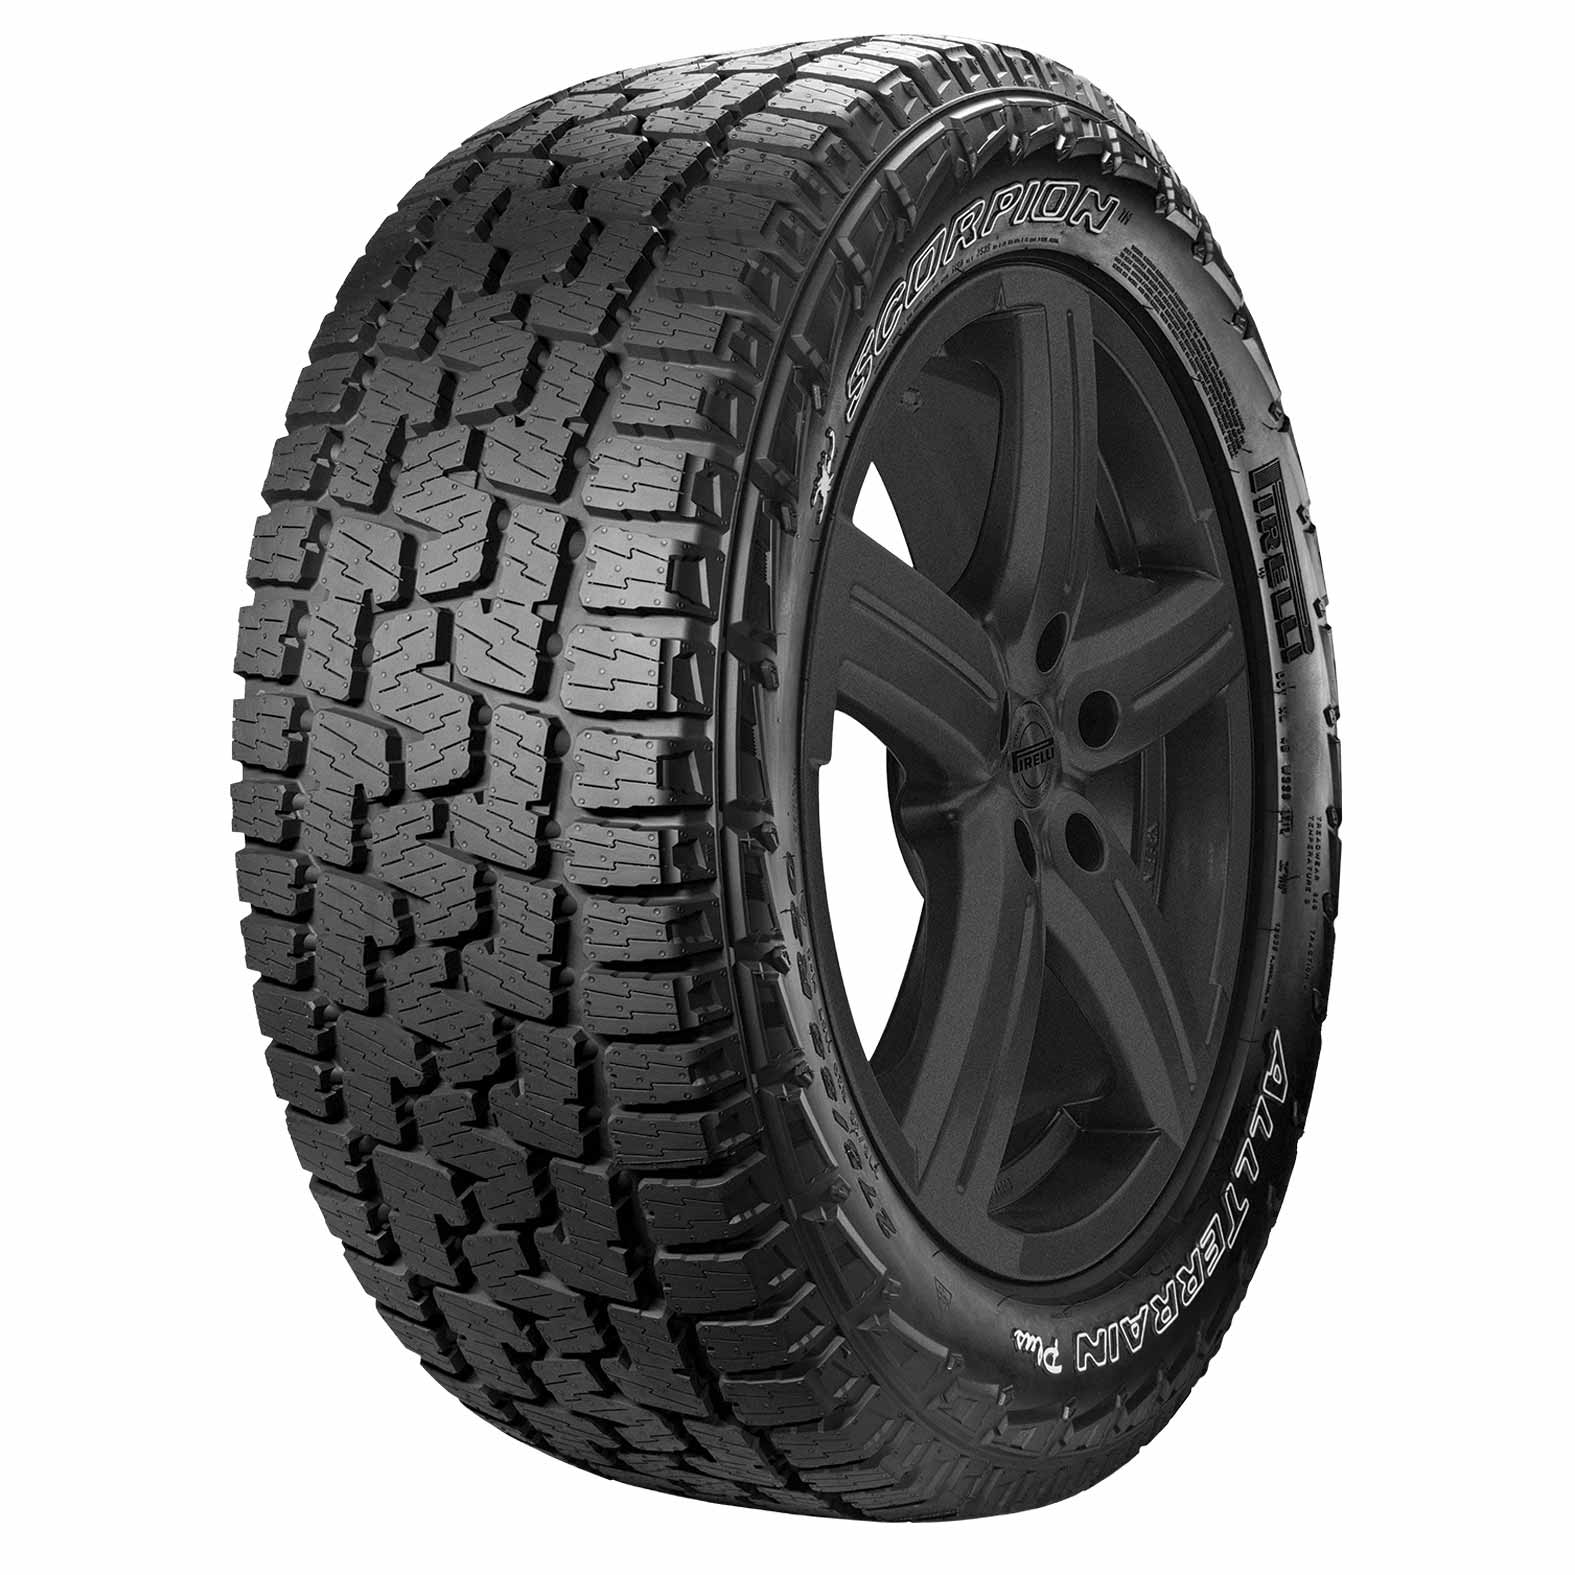 Pirelli Scorpion All-Terrain Plus Tires for All-Terrain